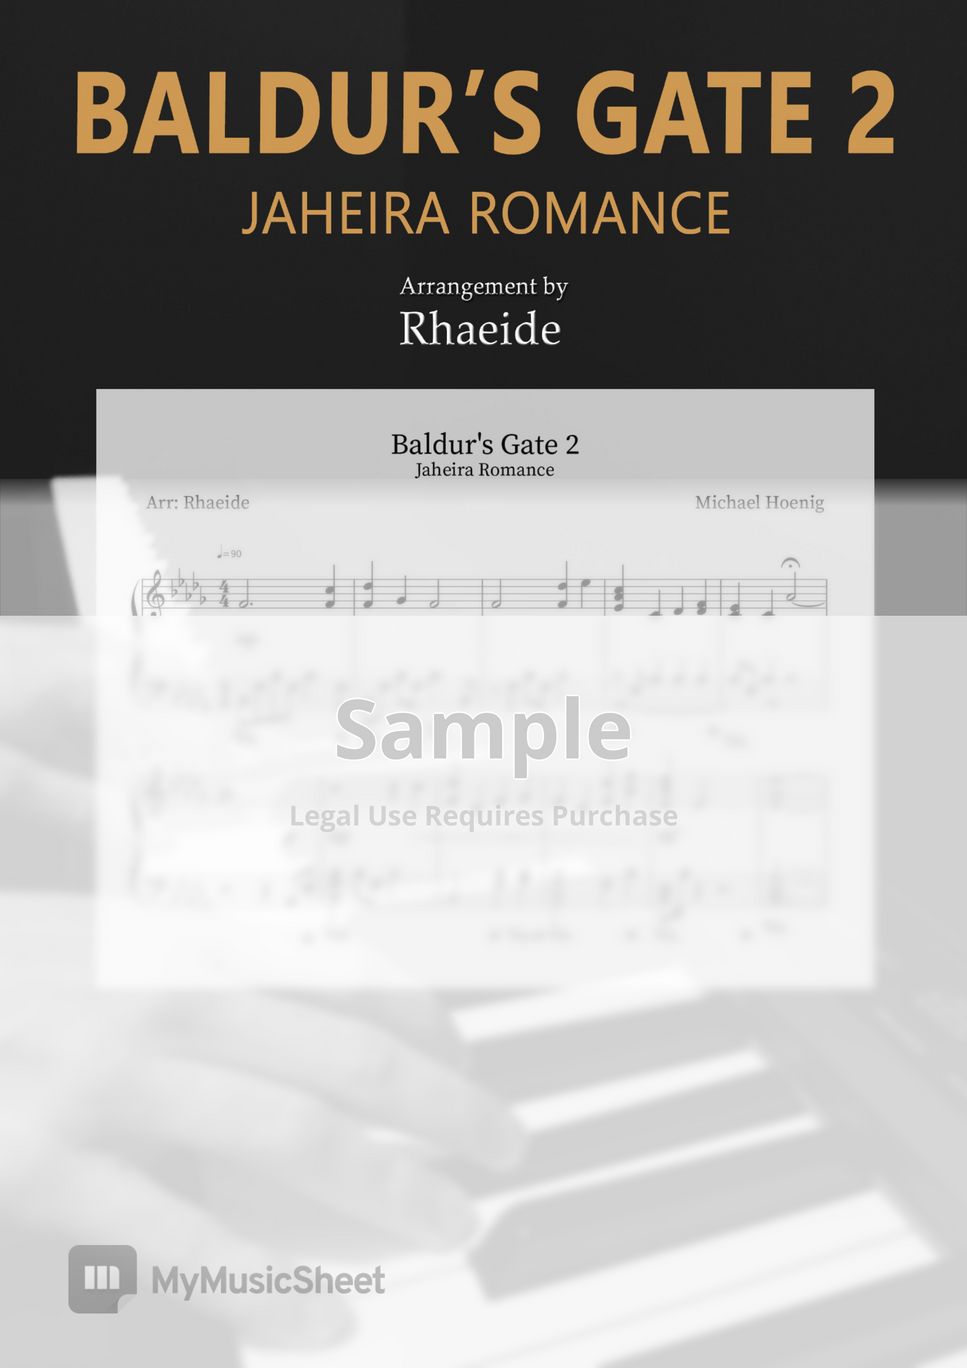 Baldur's Gate 2 - Jaheira Romance (Michael Hoenig) by Rhaeide